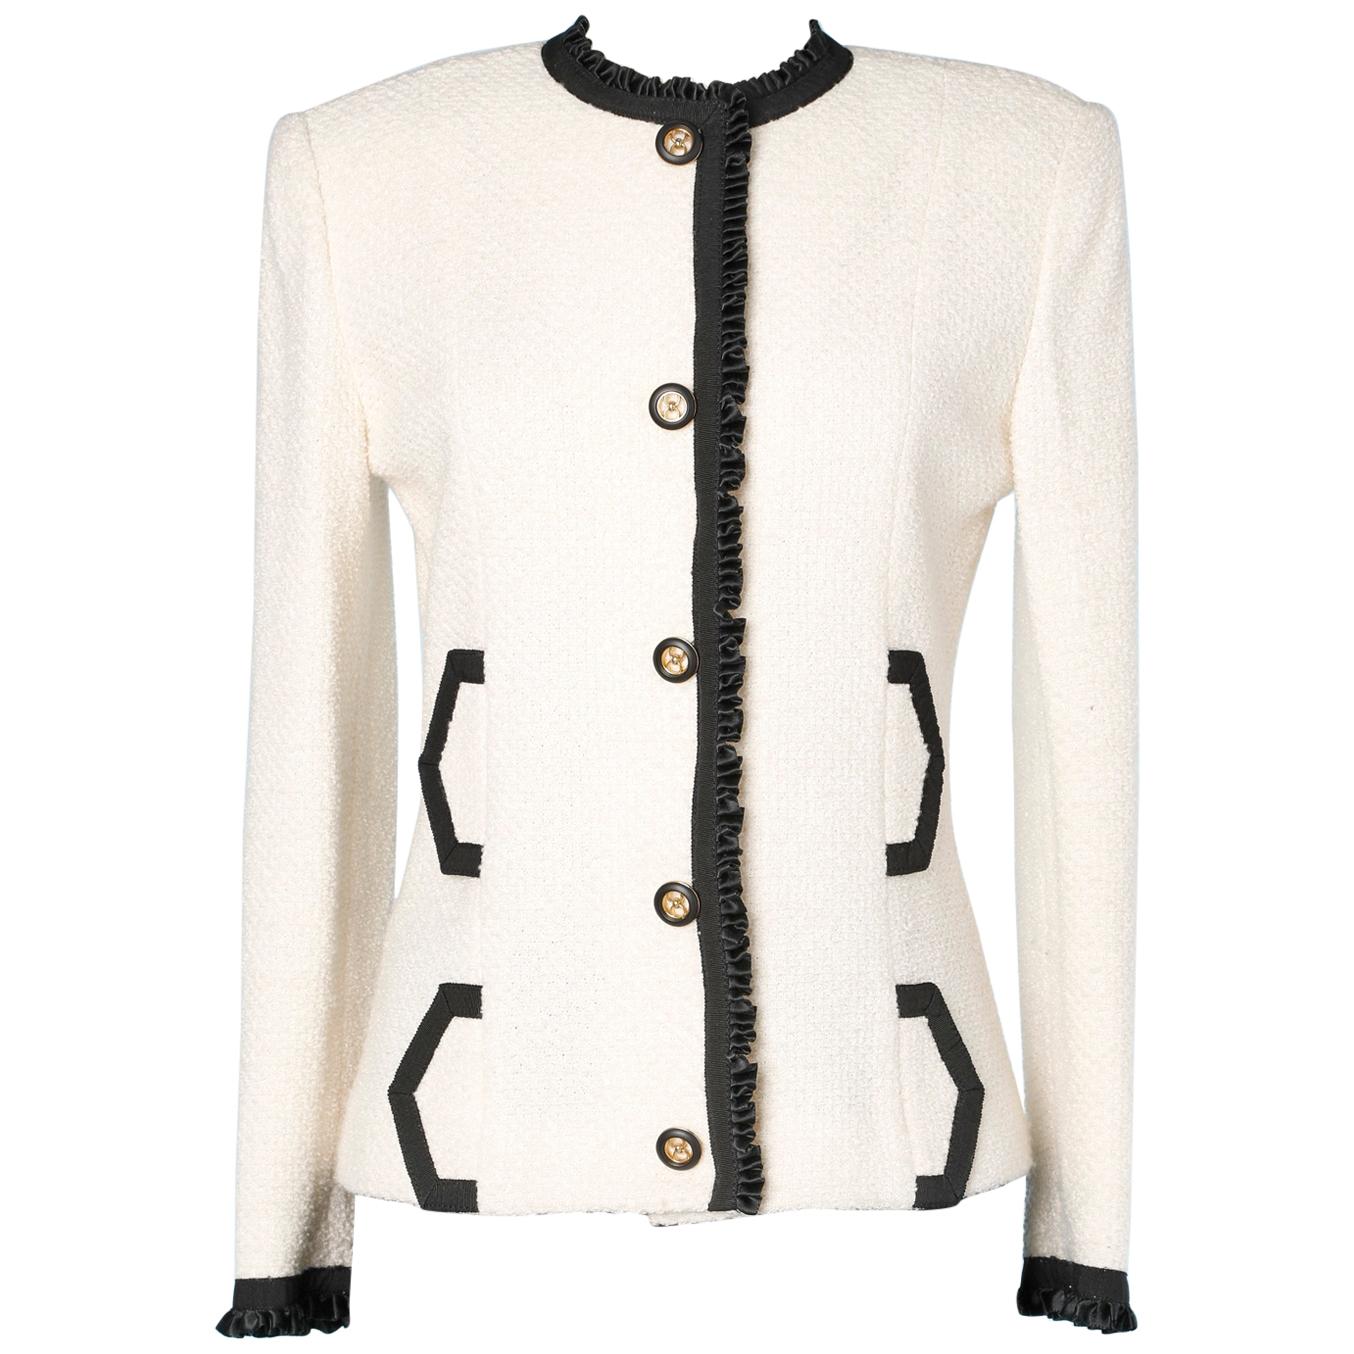 Adolfo New York "Chanel style" jacket